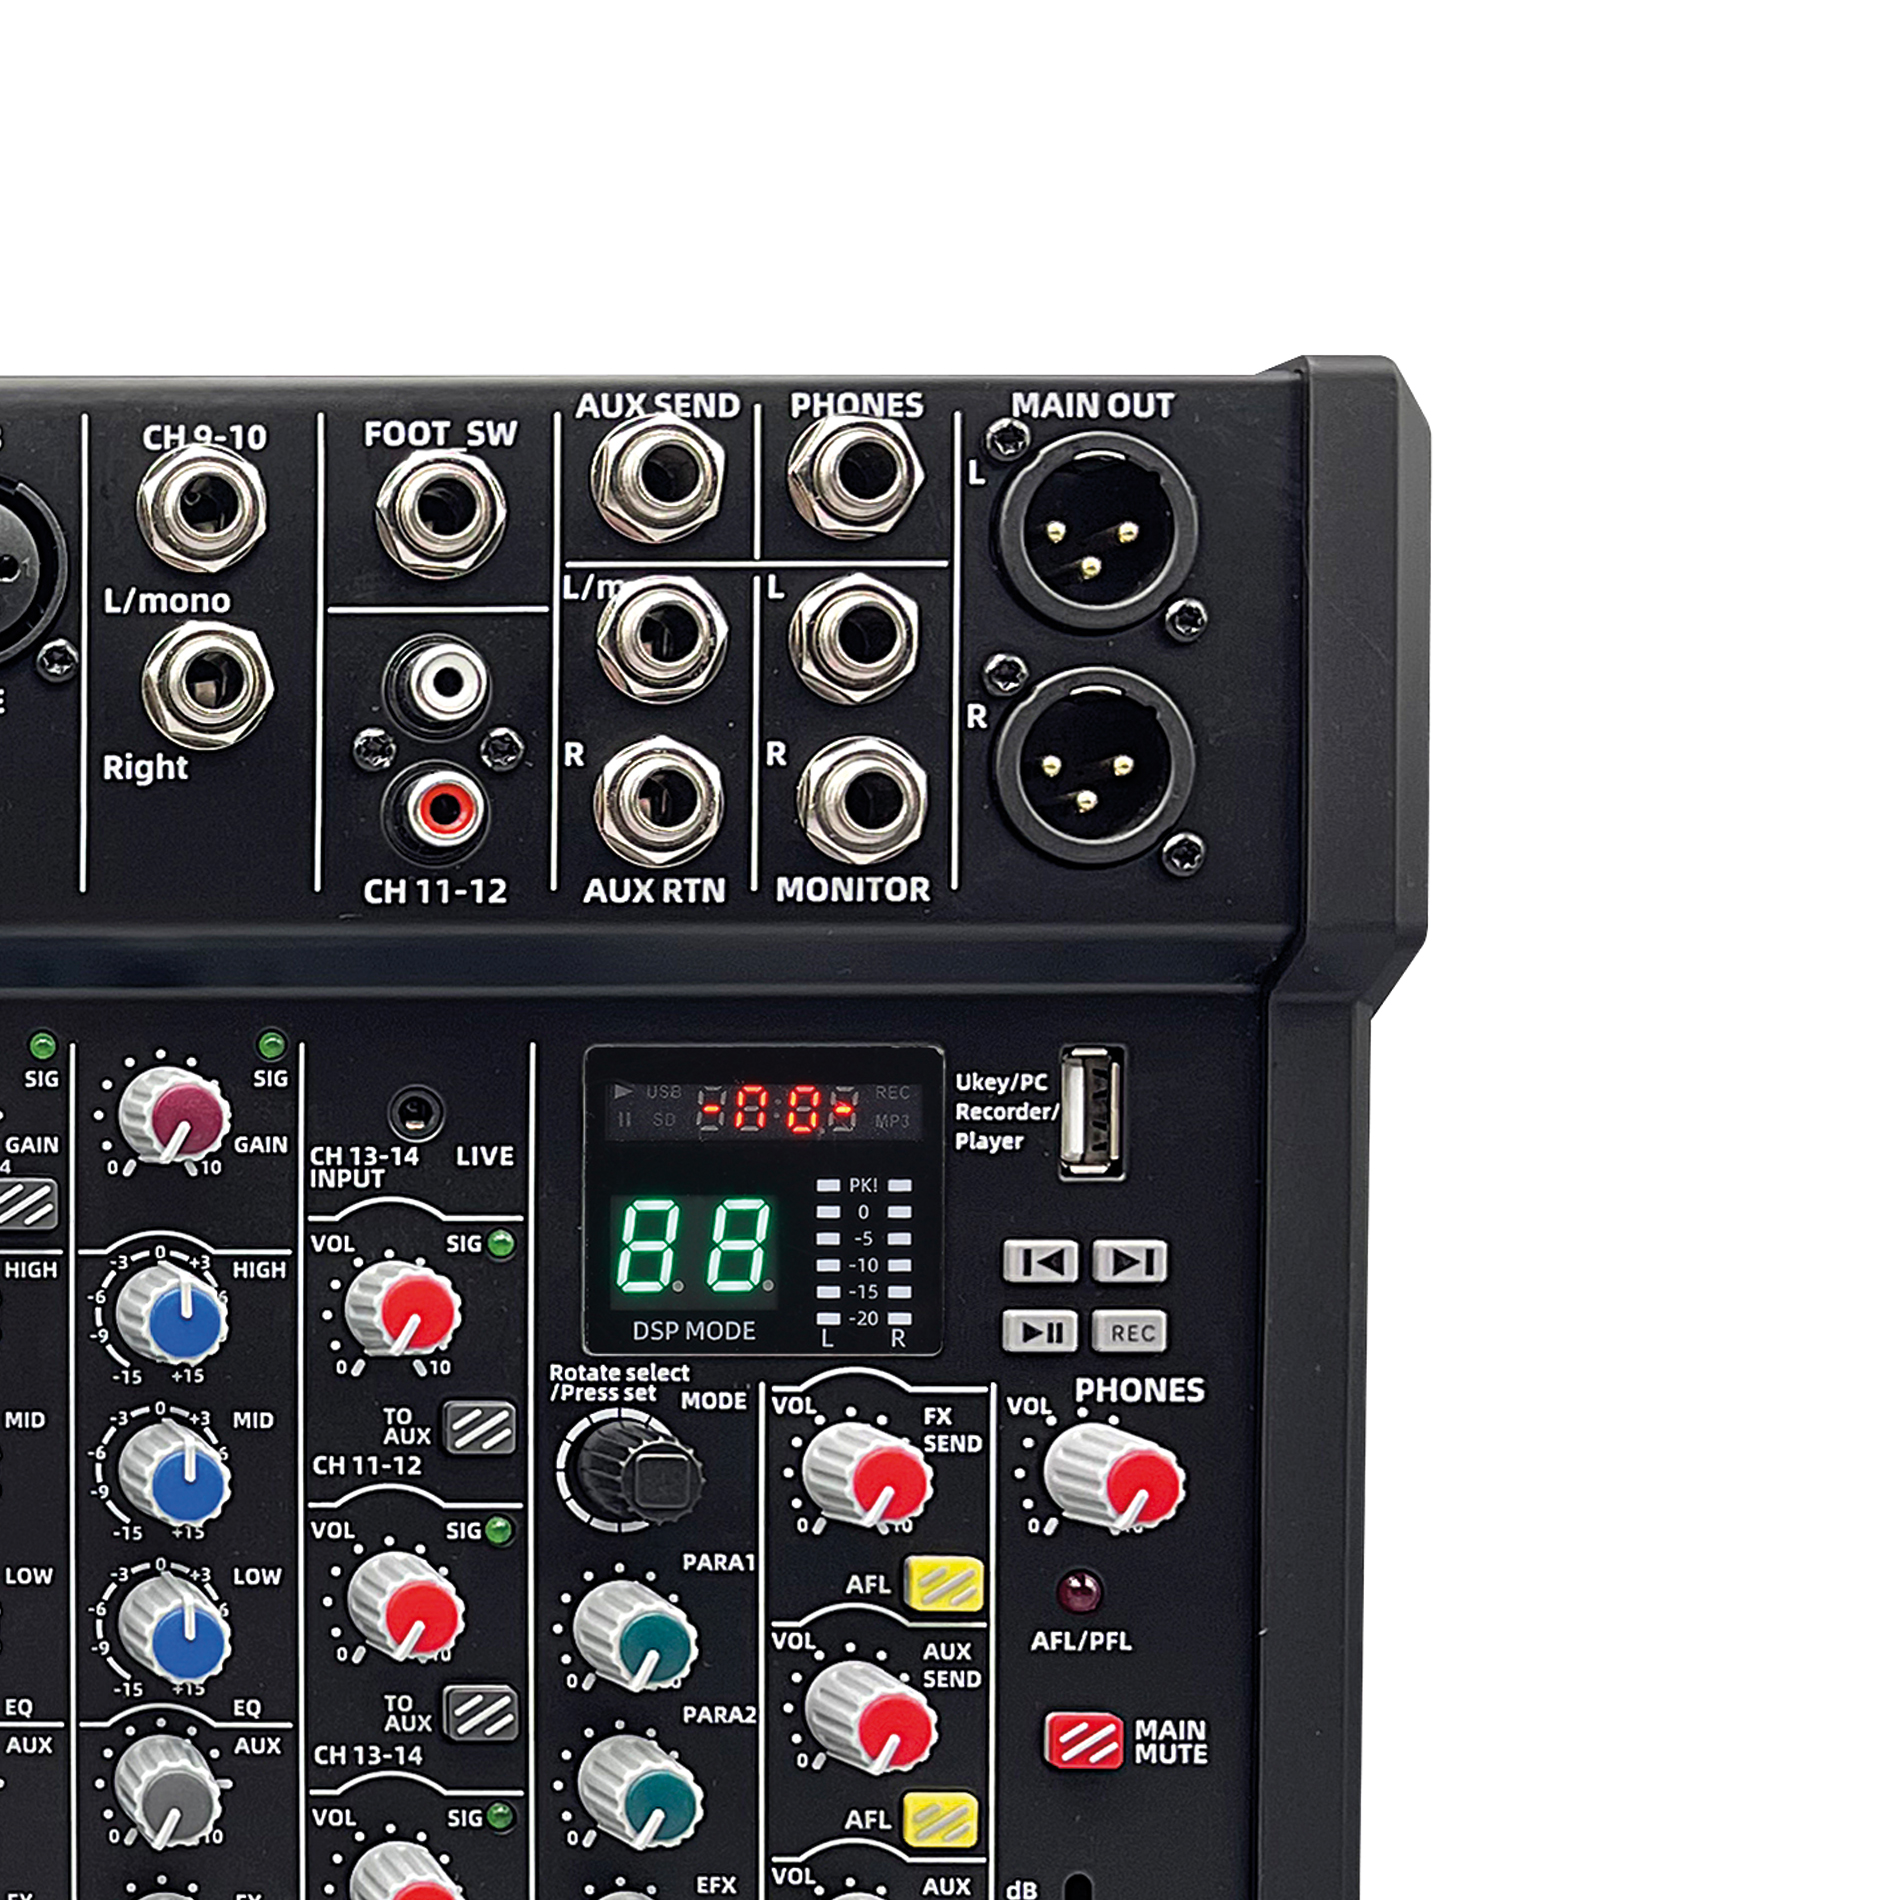 Definitive Audio Tm 833 Bu-dsp - Analog mixing desk - Variation 6